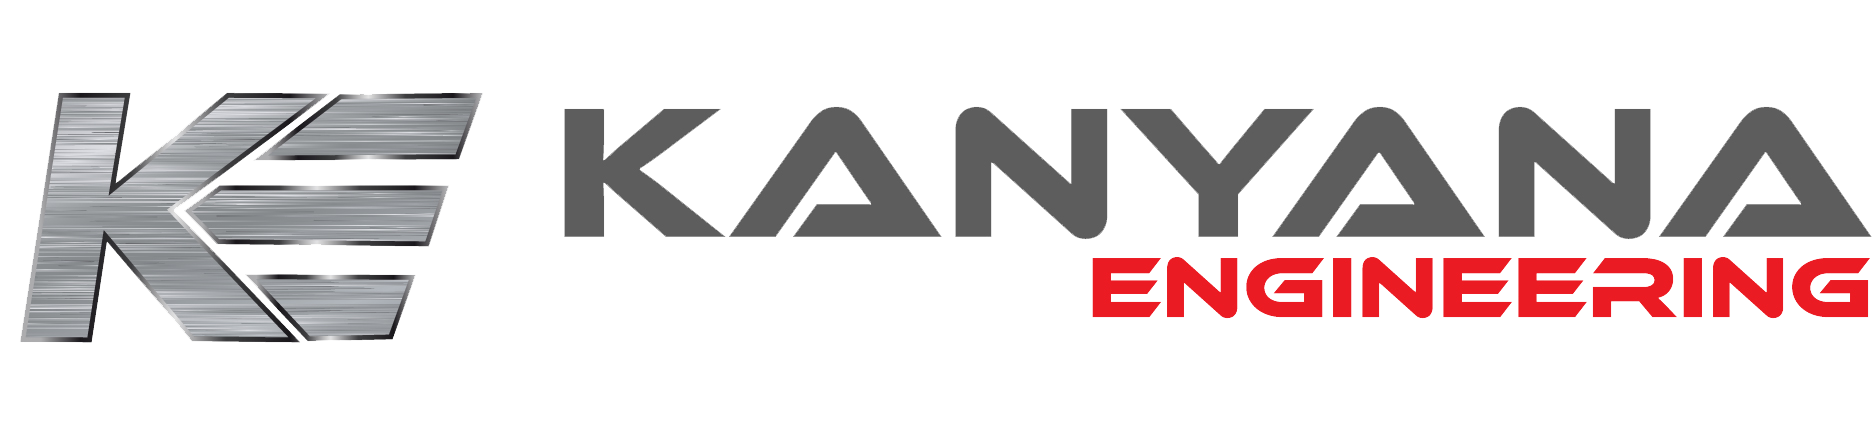 Kanyana Engineering Pty Ltd logo